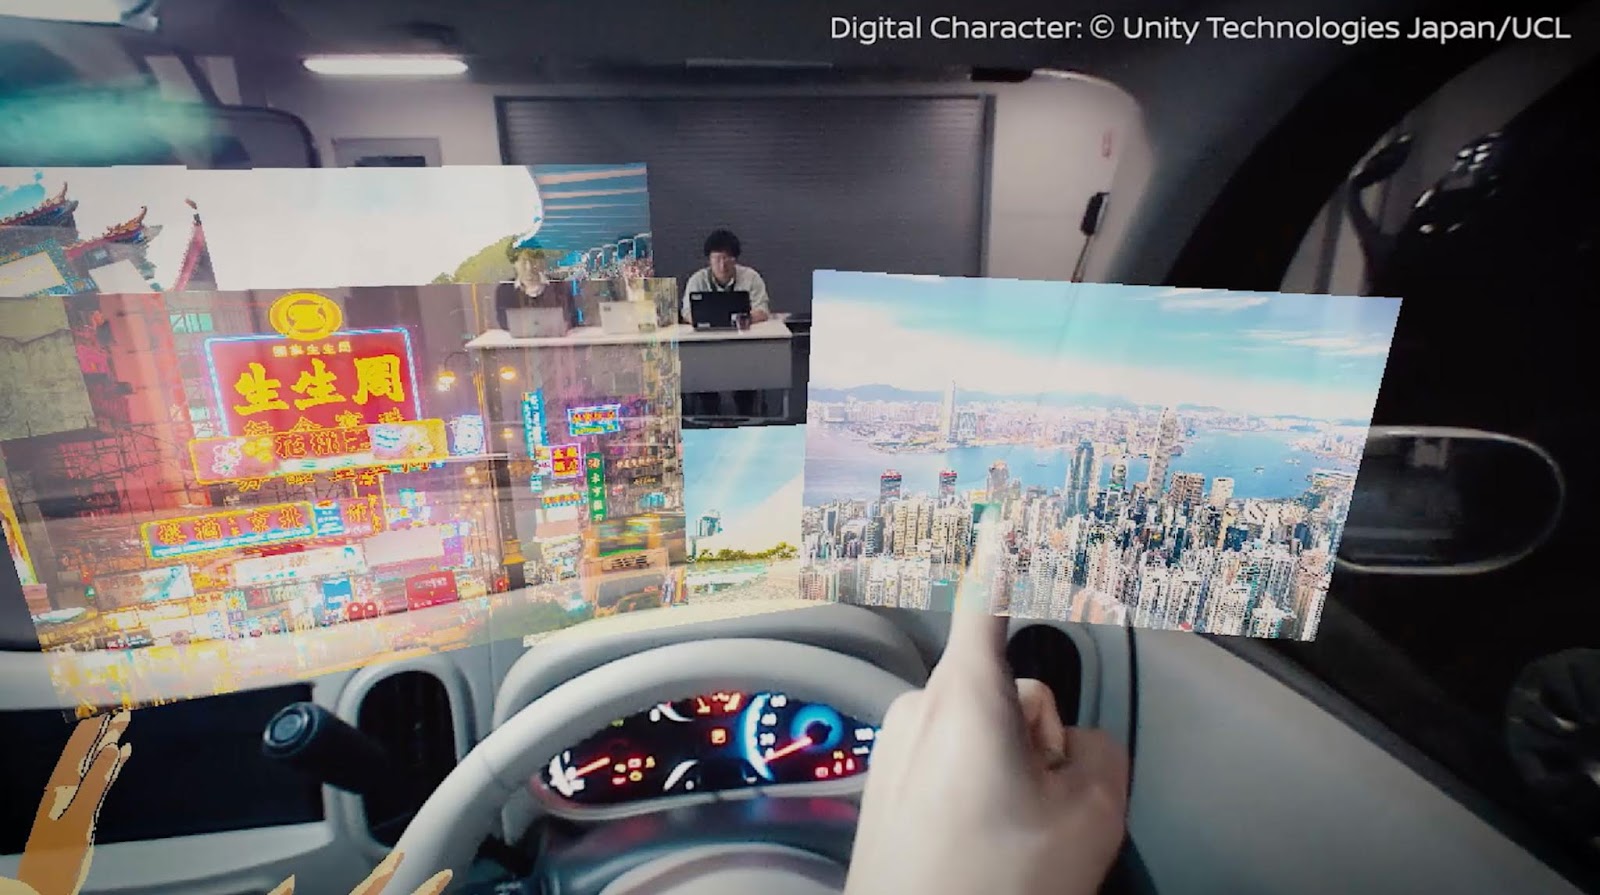 NISSAN I2V 1 Η Nissan σχεδιάζει augmented reality για τα μοντέλα της